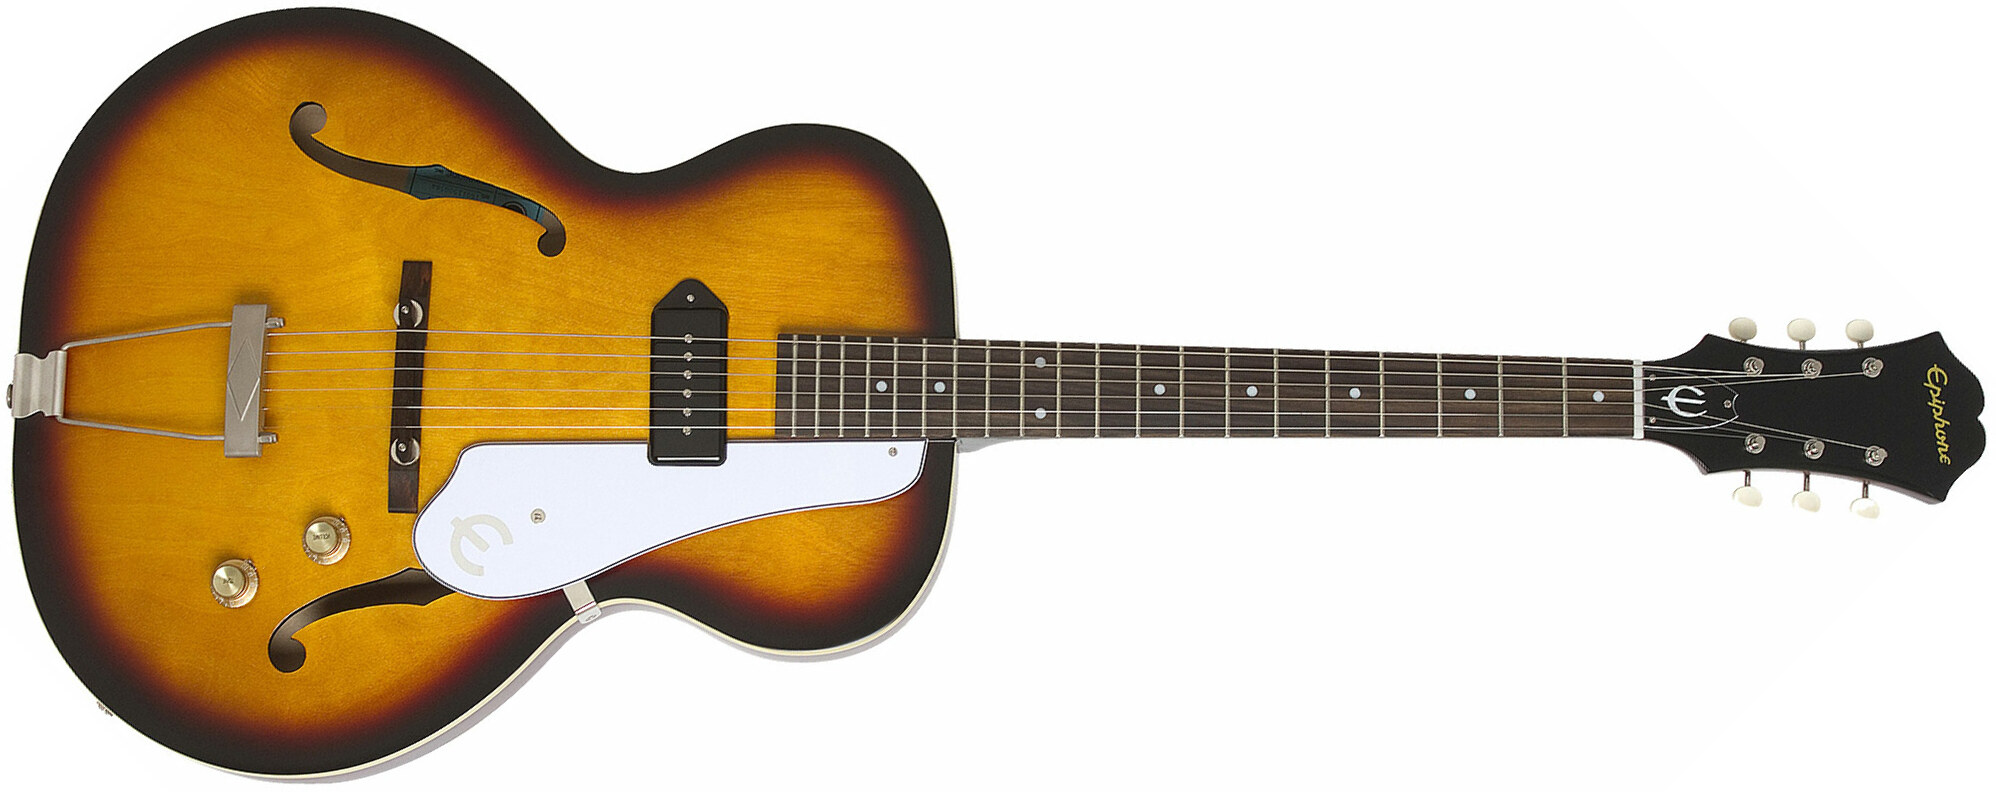 Epiphone Inspired By 1966 Century 2016 - Aged Gloss Vintage Sunburst - Guitare Électrique 1/2 Caisse - Main picture